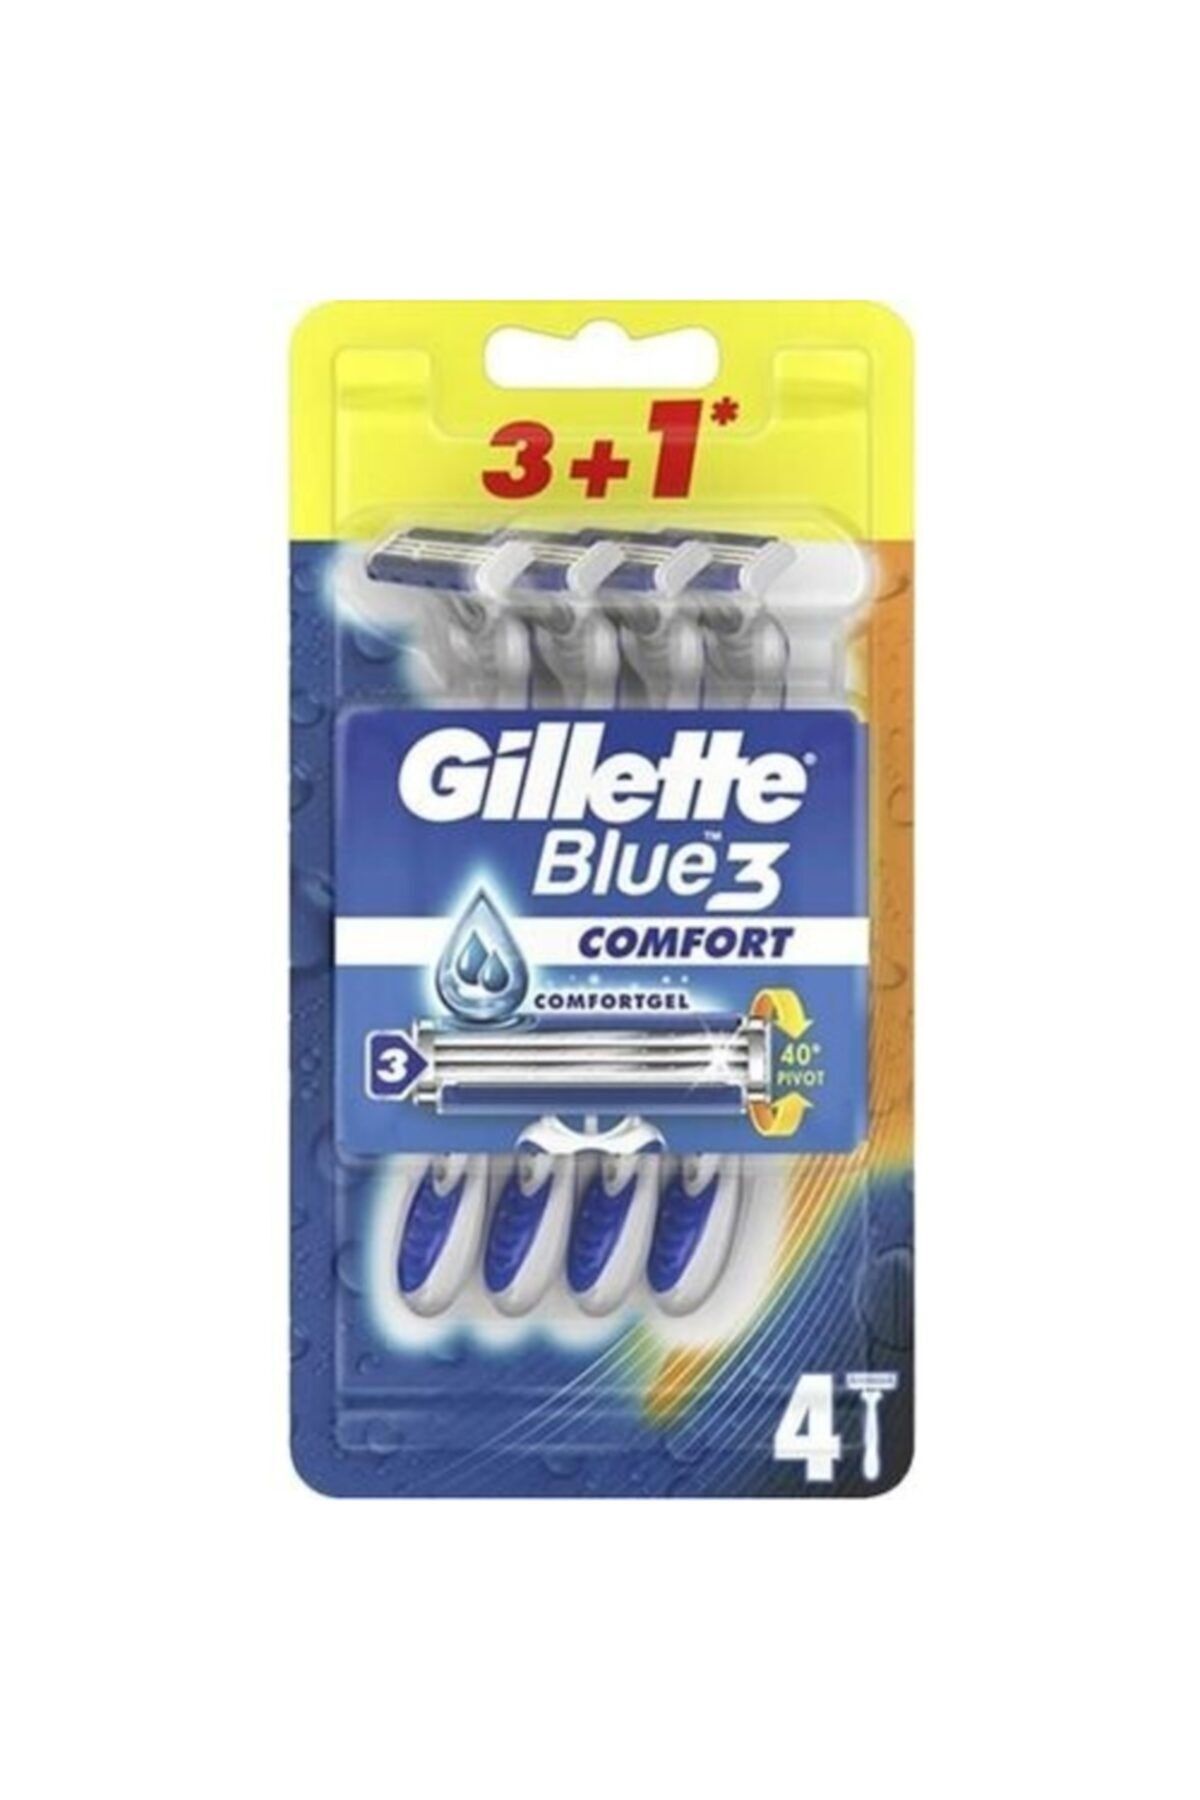 Gillette Blue3 Comfort Kullan At Tıraş Bıçağı 3+1'li